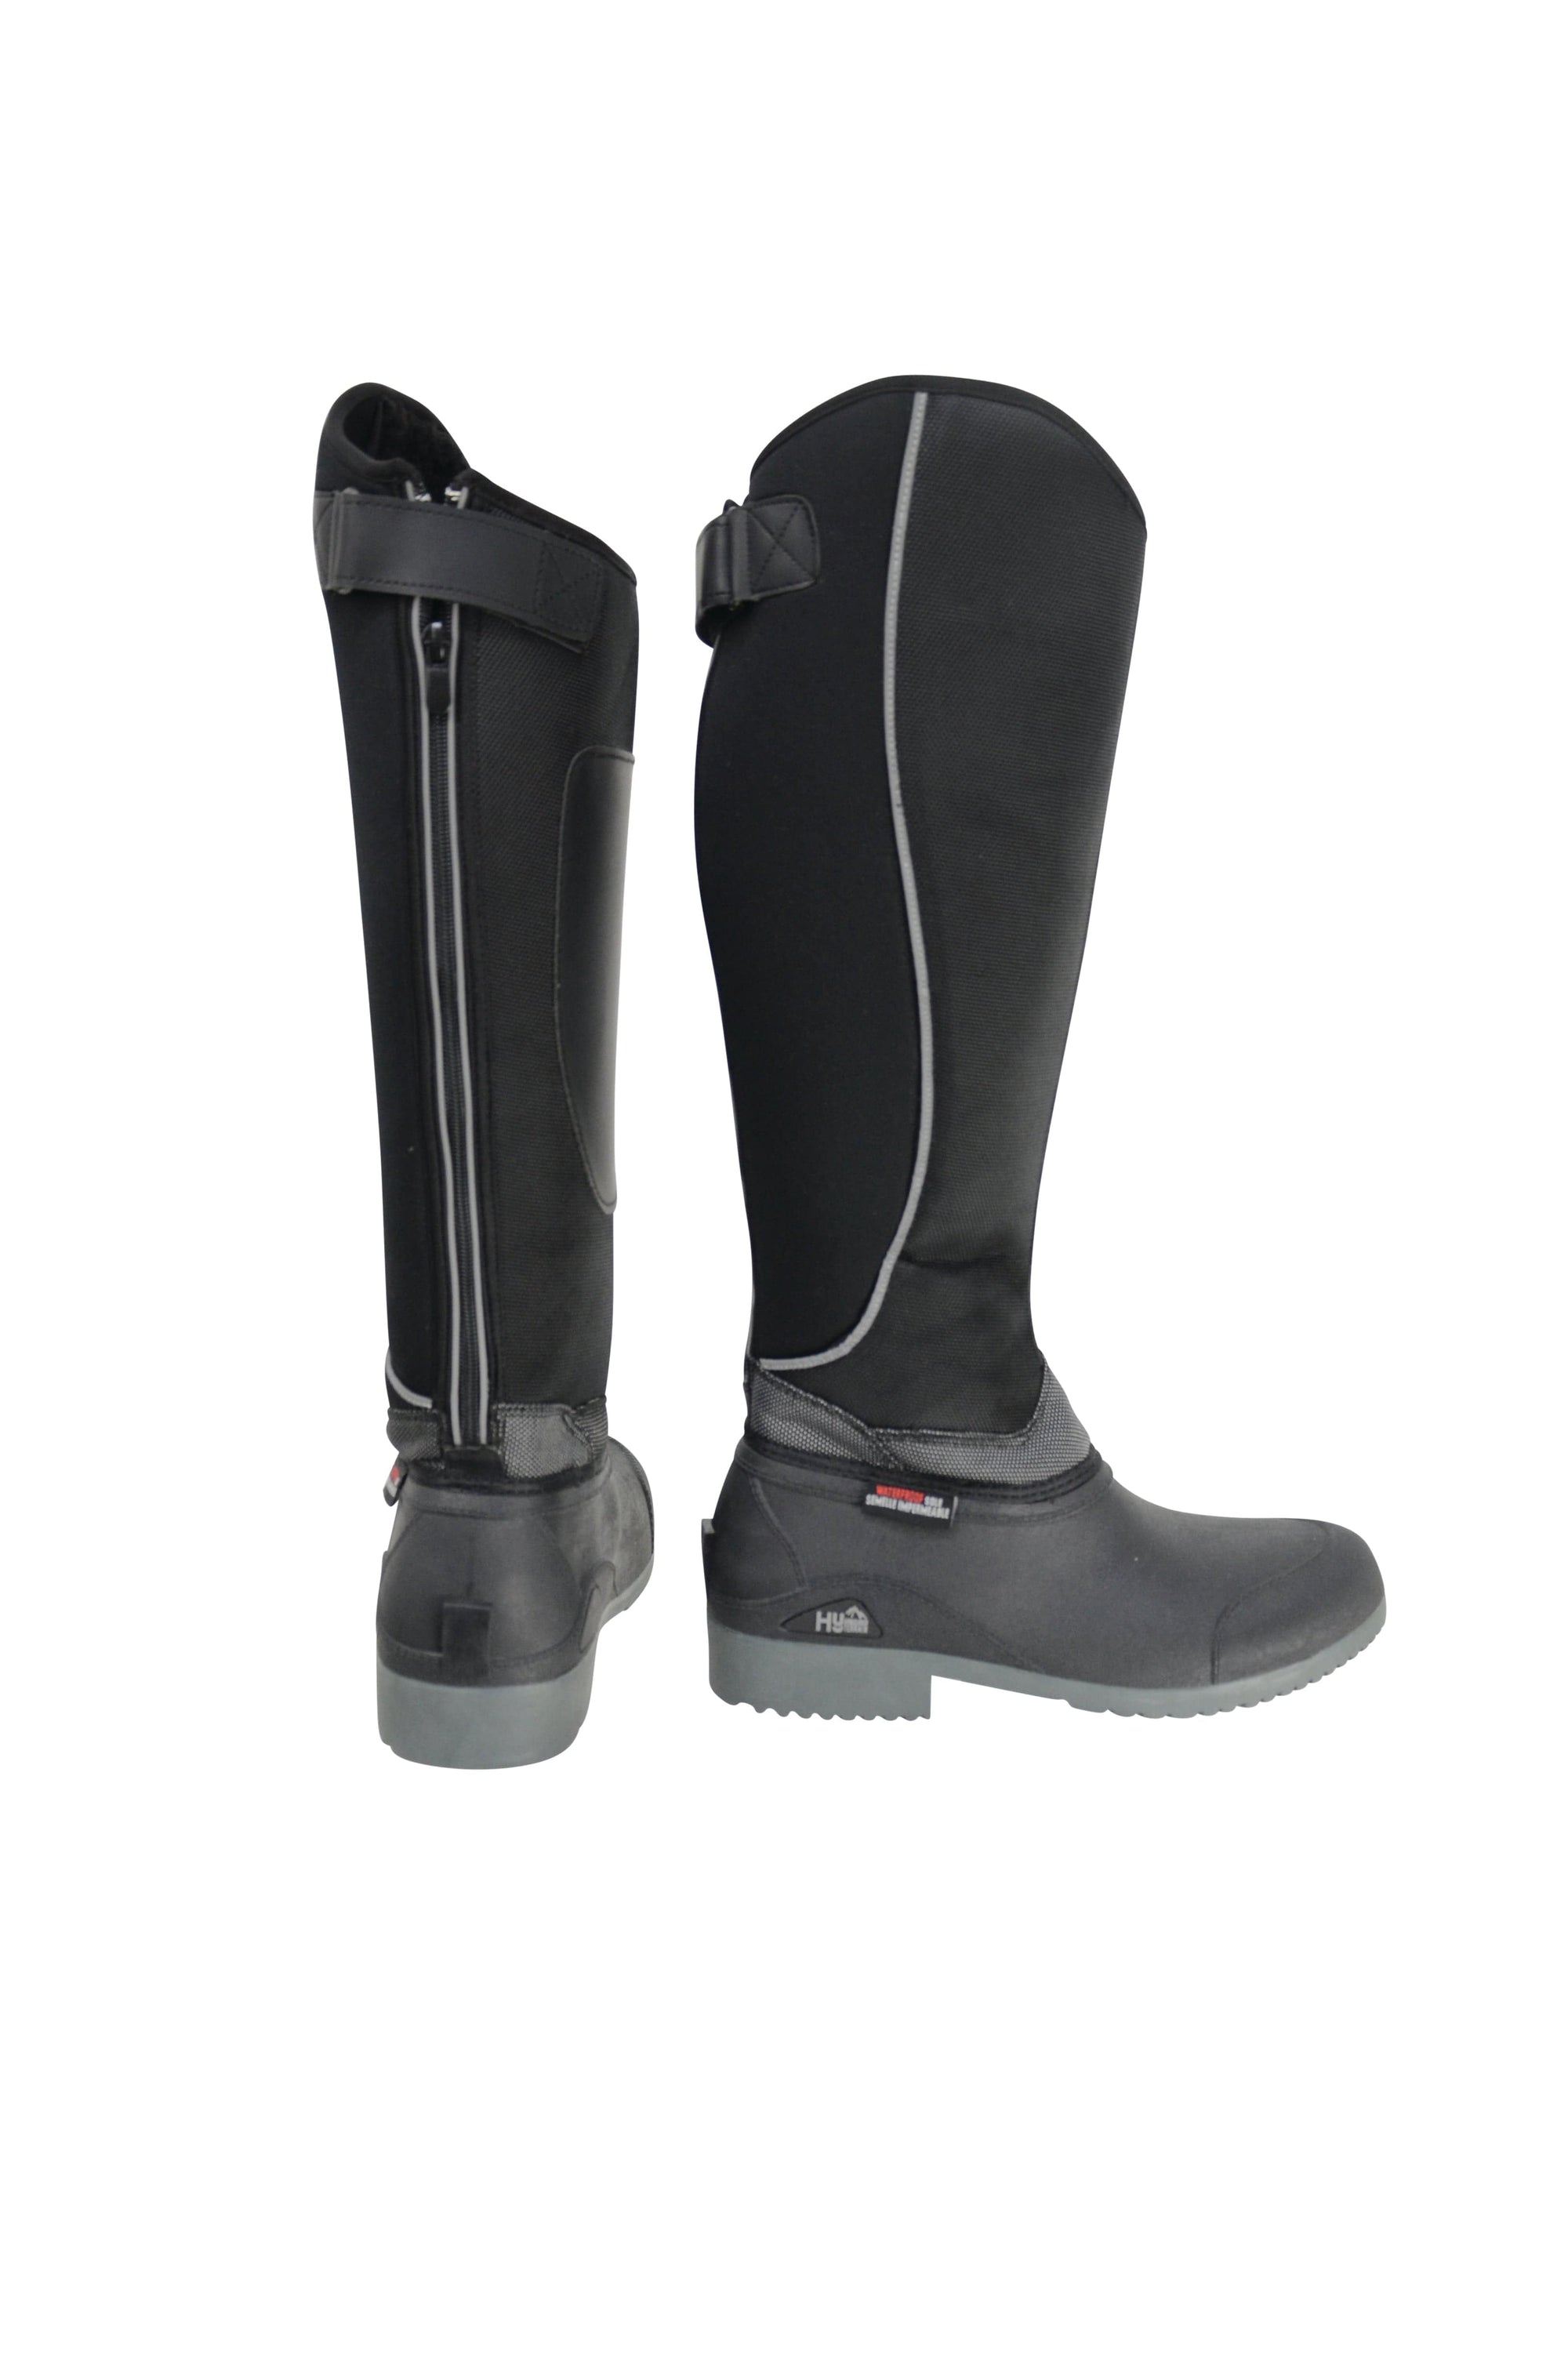 Hy equestrian norway winter yard boots - black - 36 standard